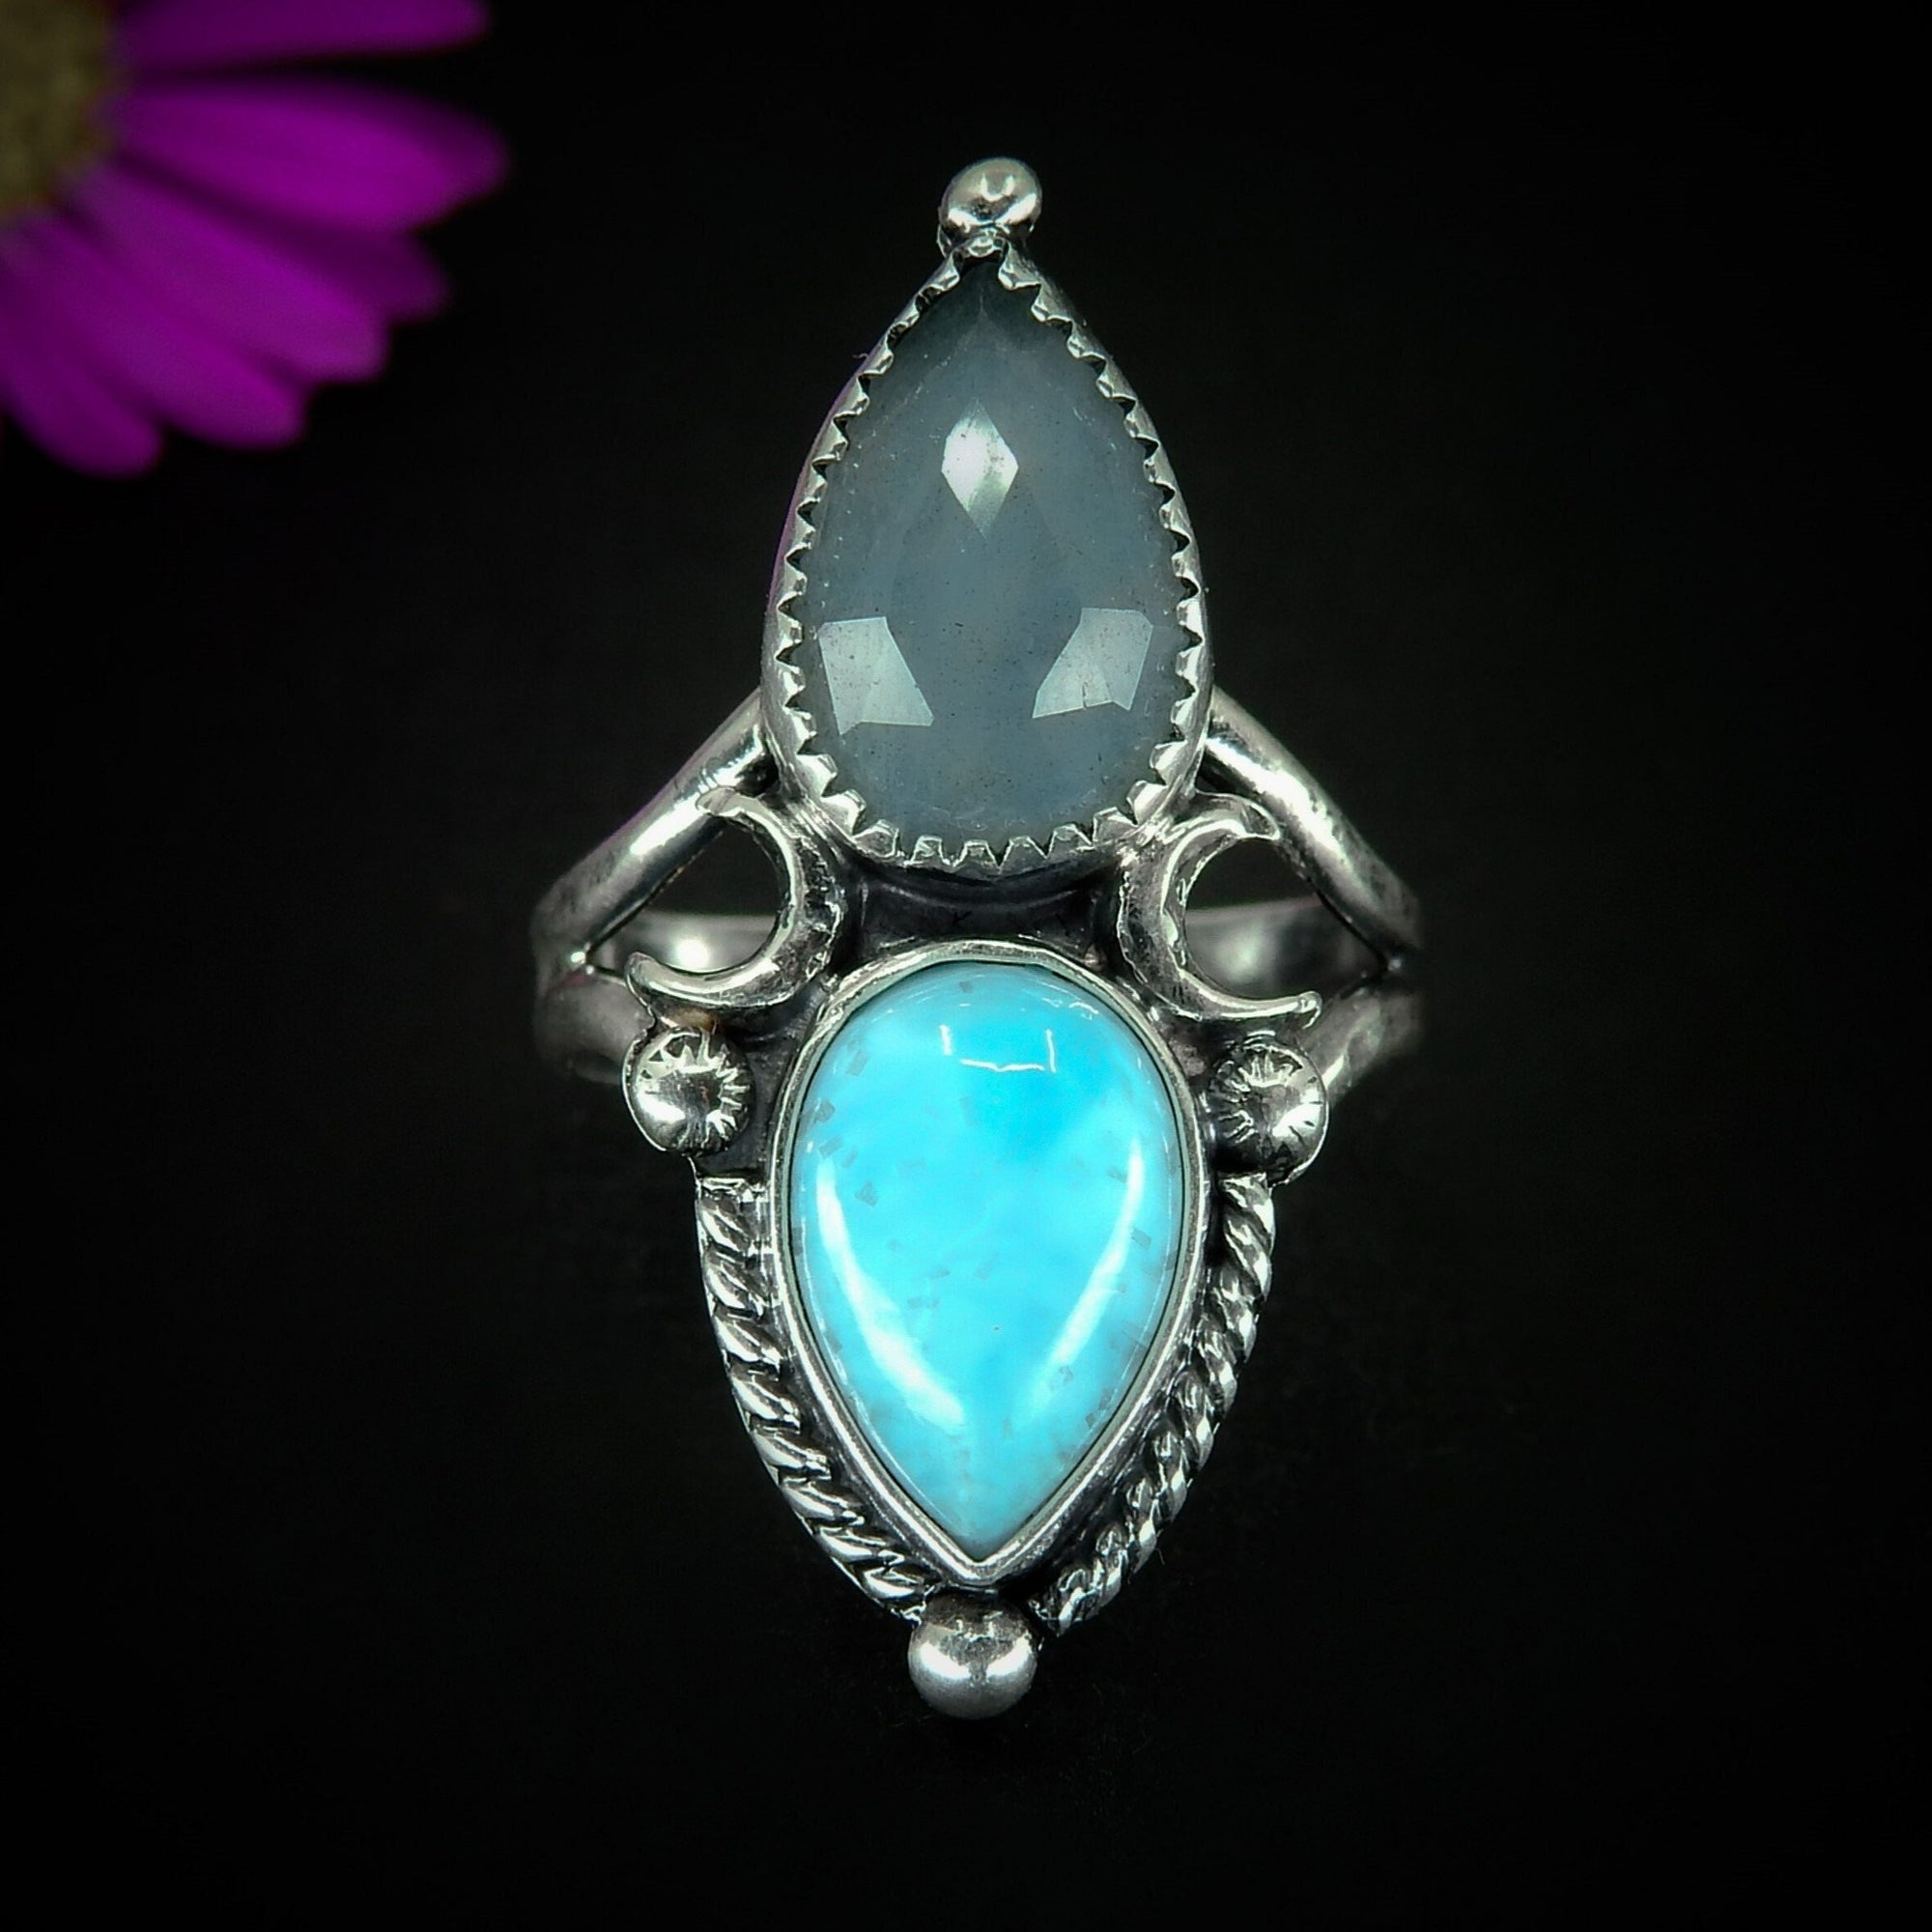 Rose Cut Aquamarine & Larimar Ring - Size 6 1/4 - Sterling Silver - Aquamarine Ring - Ocean Jewelry - Crescent Moon Statement Ring OOAK